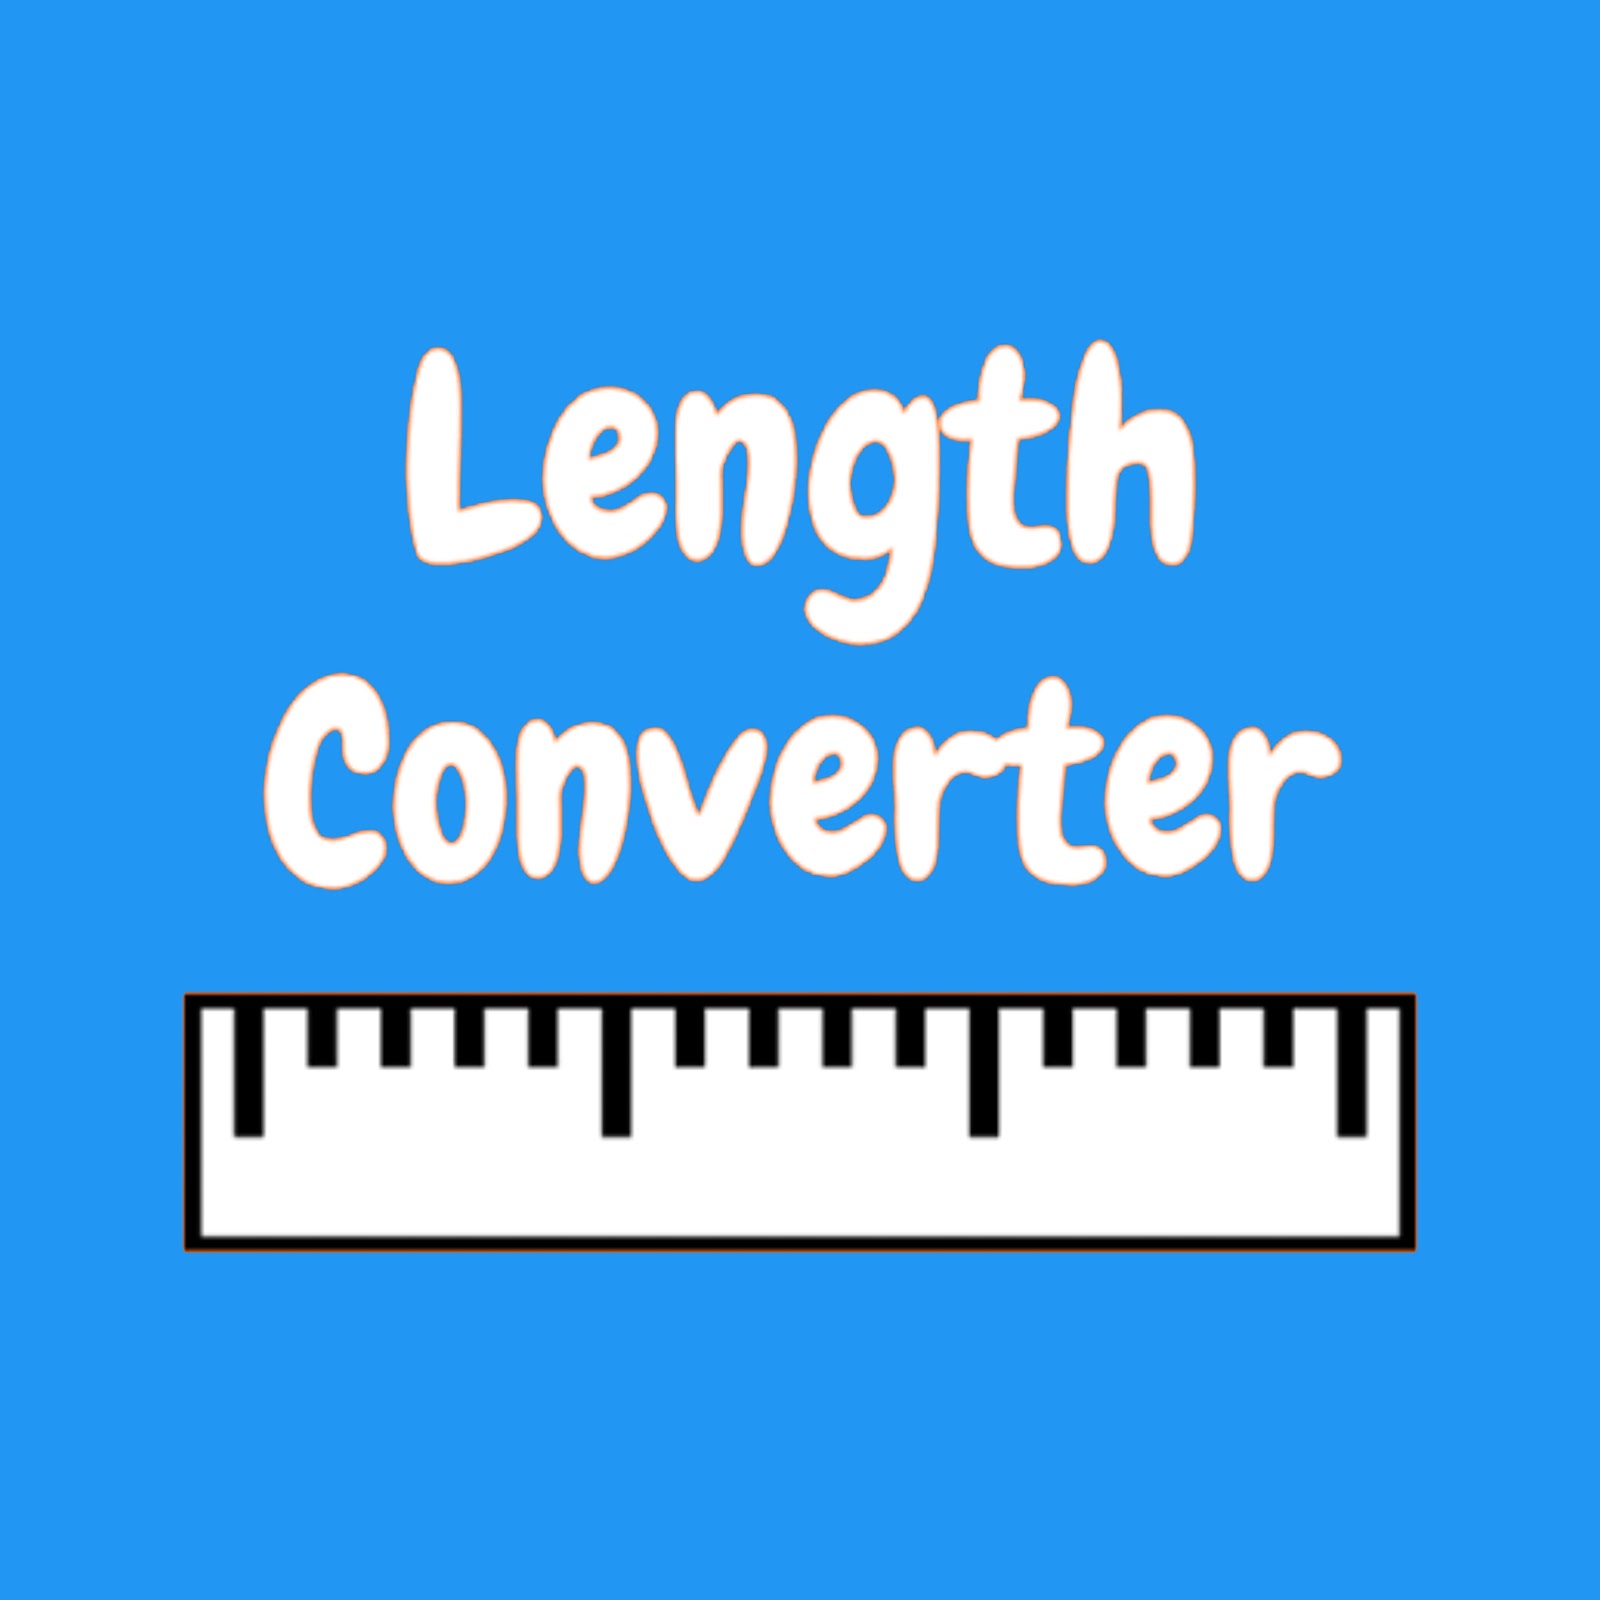 Length Converter